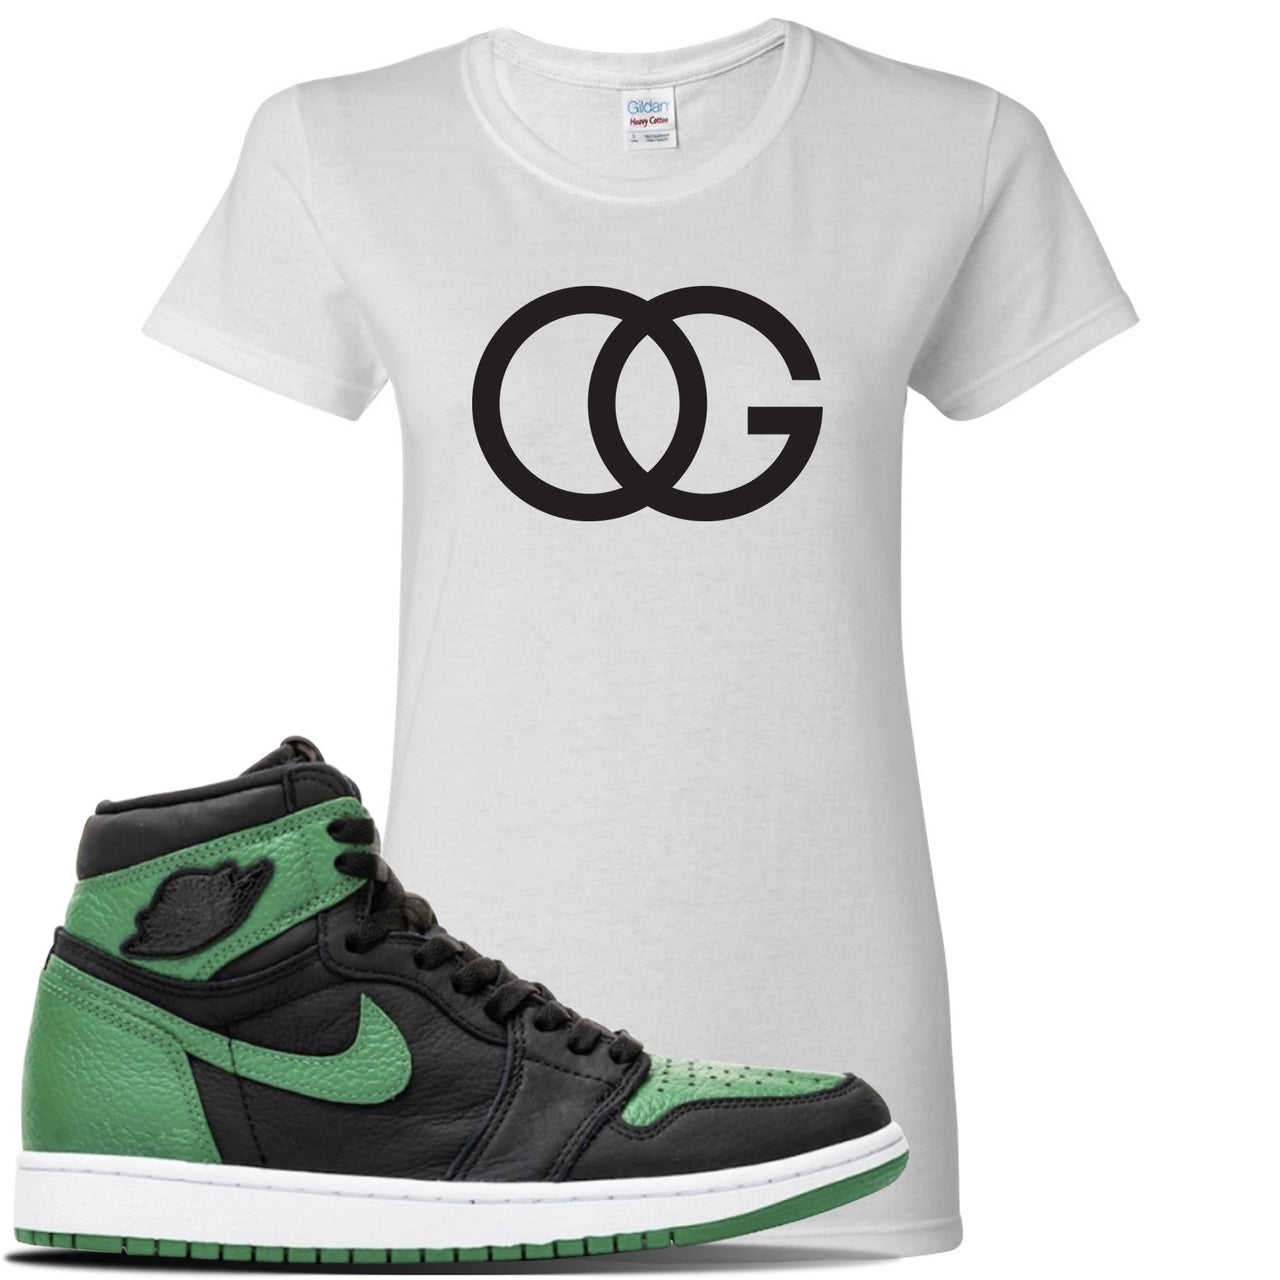 Jordan 1 Retro High OG Pine Green Gym Sneaker White Women's T Shirt | Women's Tees to match Air Jordan 1 Retro High OG Pine Green Gym Shoes | OG